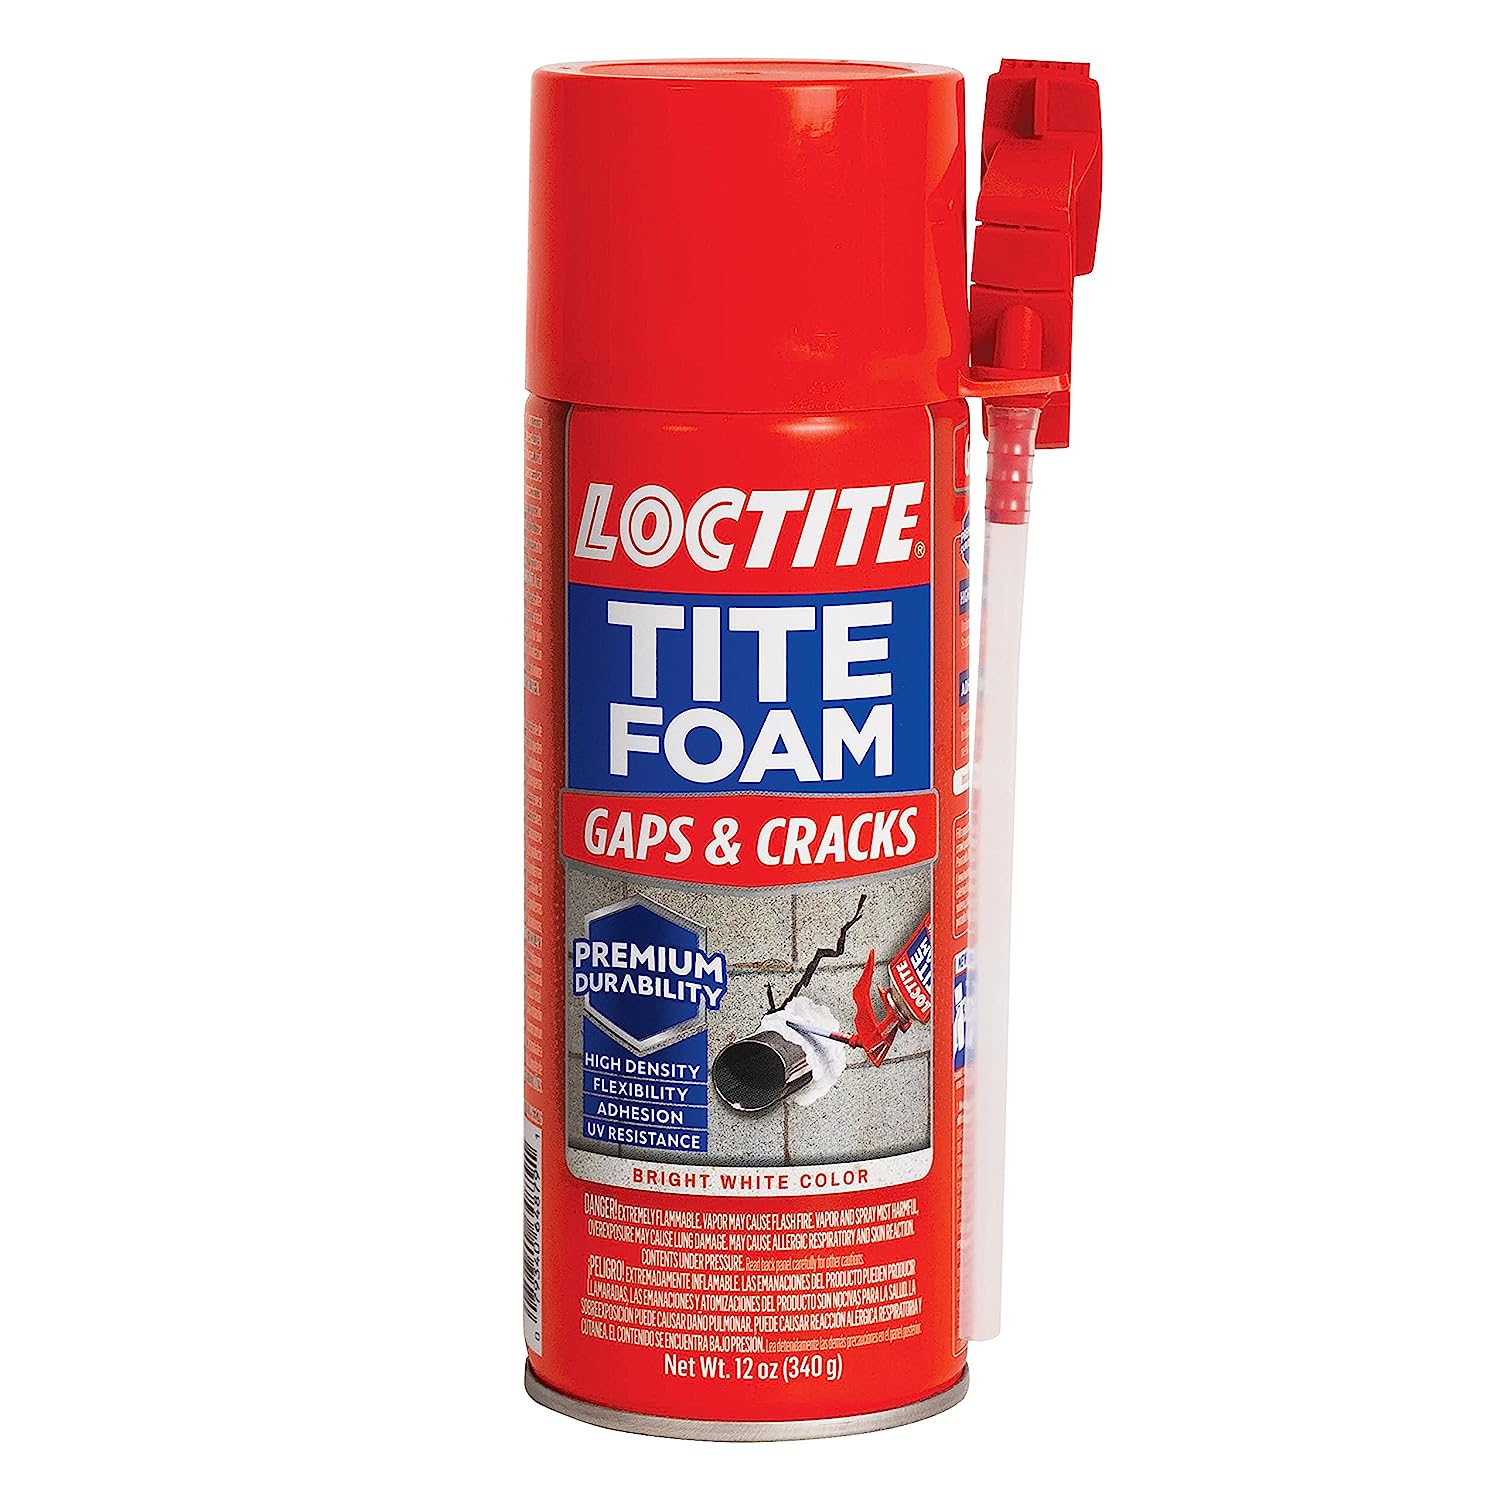 Loctite Tite Foam Gaps & Cracks Spray Foam Sealant, [...]